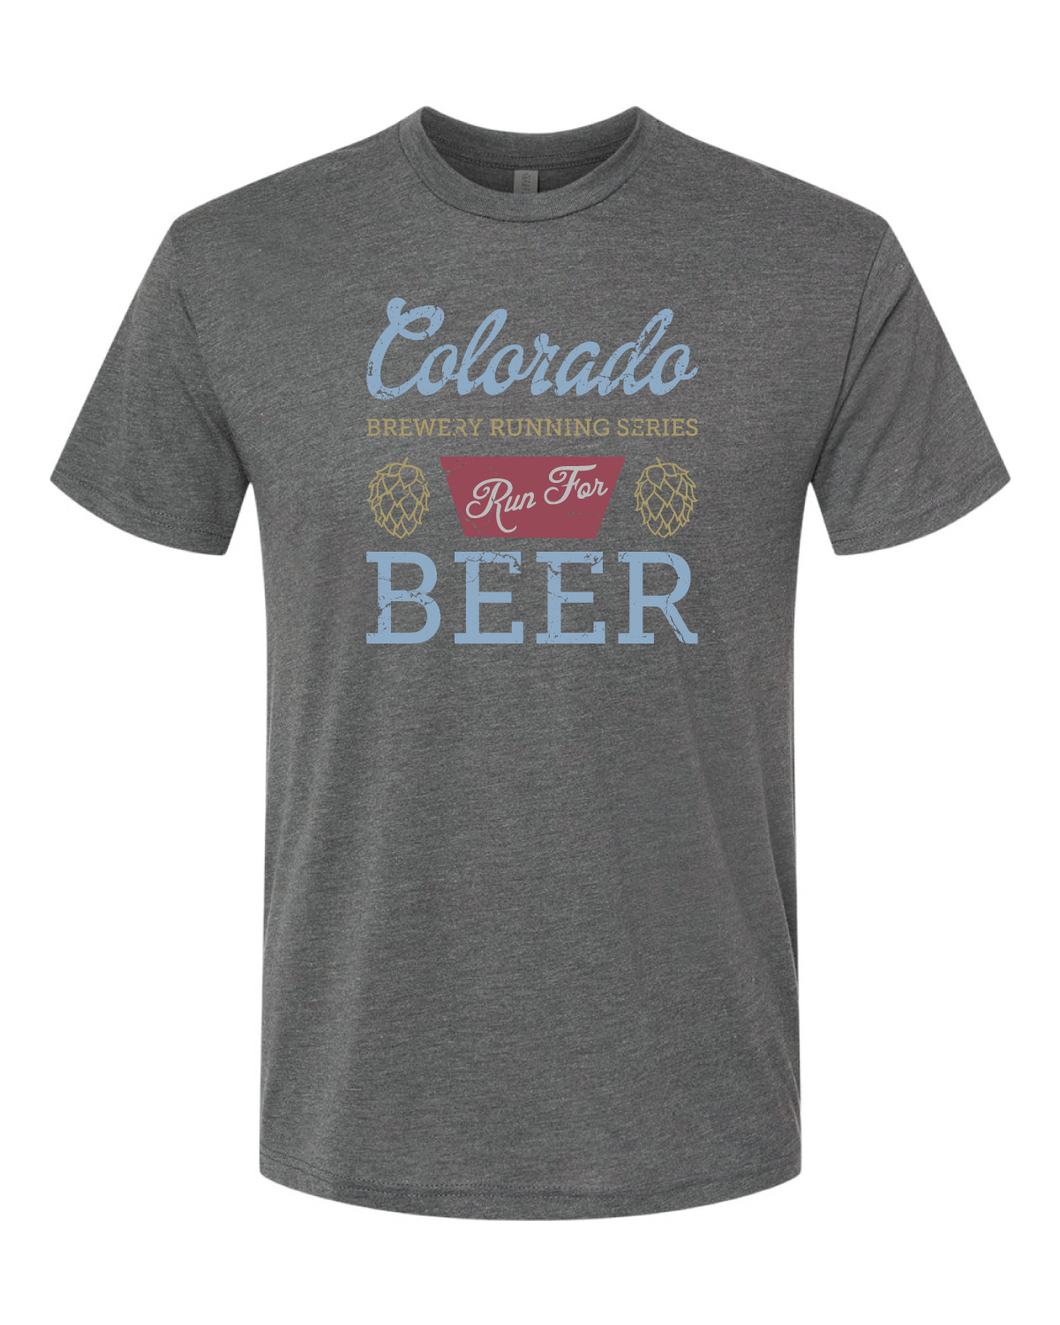 Run For Colorado - T-Shirt - Vintage Heavy Metal (Light Blue Font)